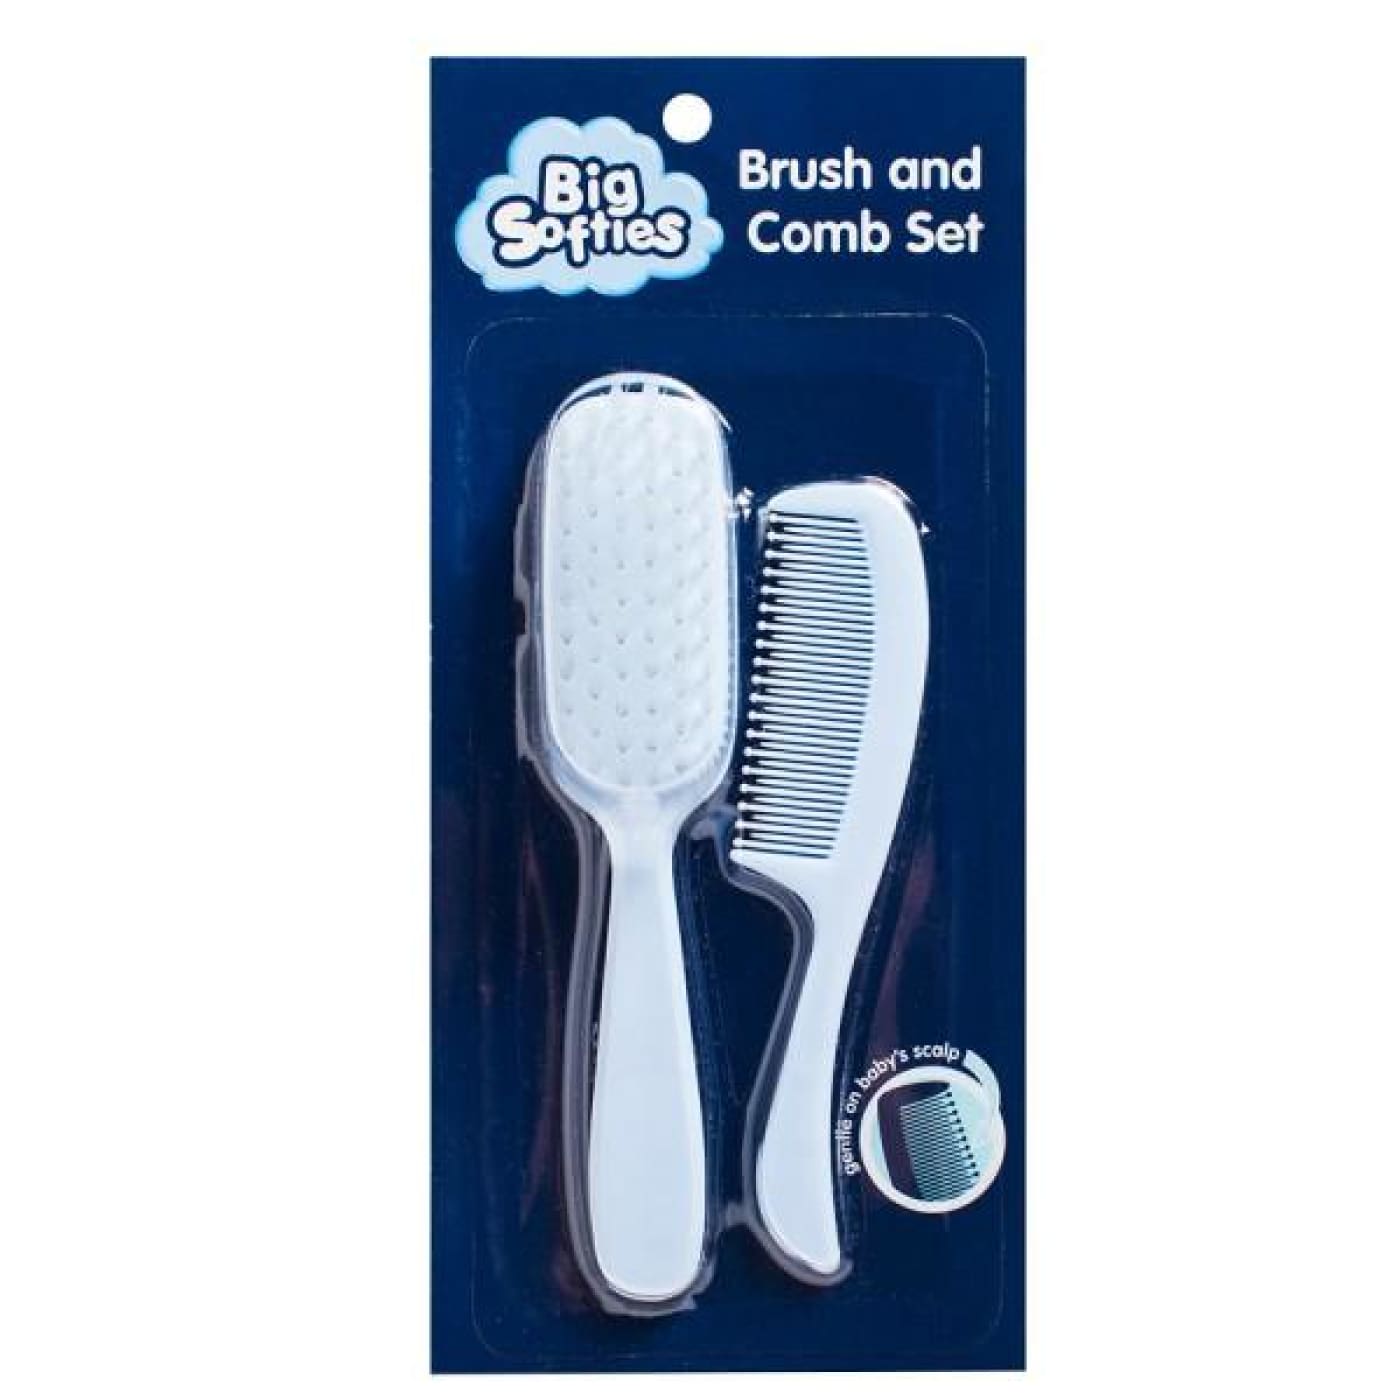 Big Softies Brush and Comb Set - Blue - BATHTIME & CHANGING - GROOMING/HYGIENE/COSMETICS